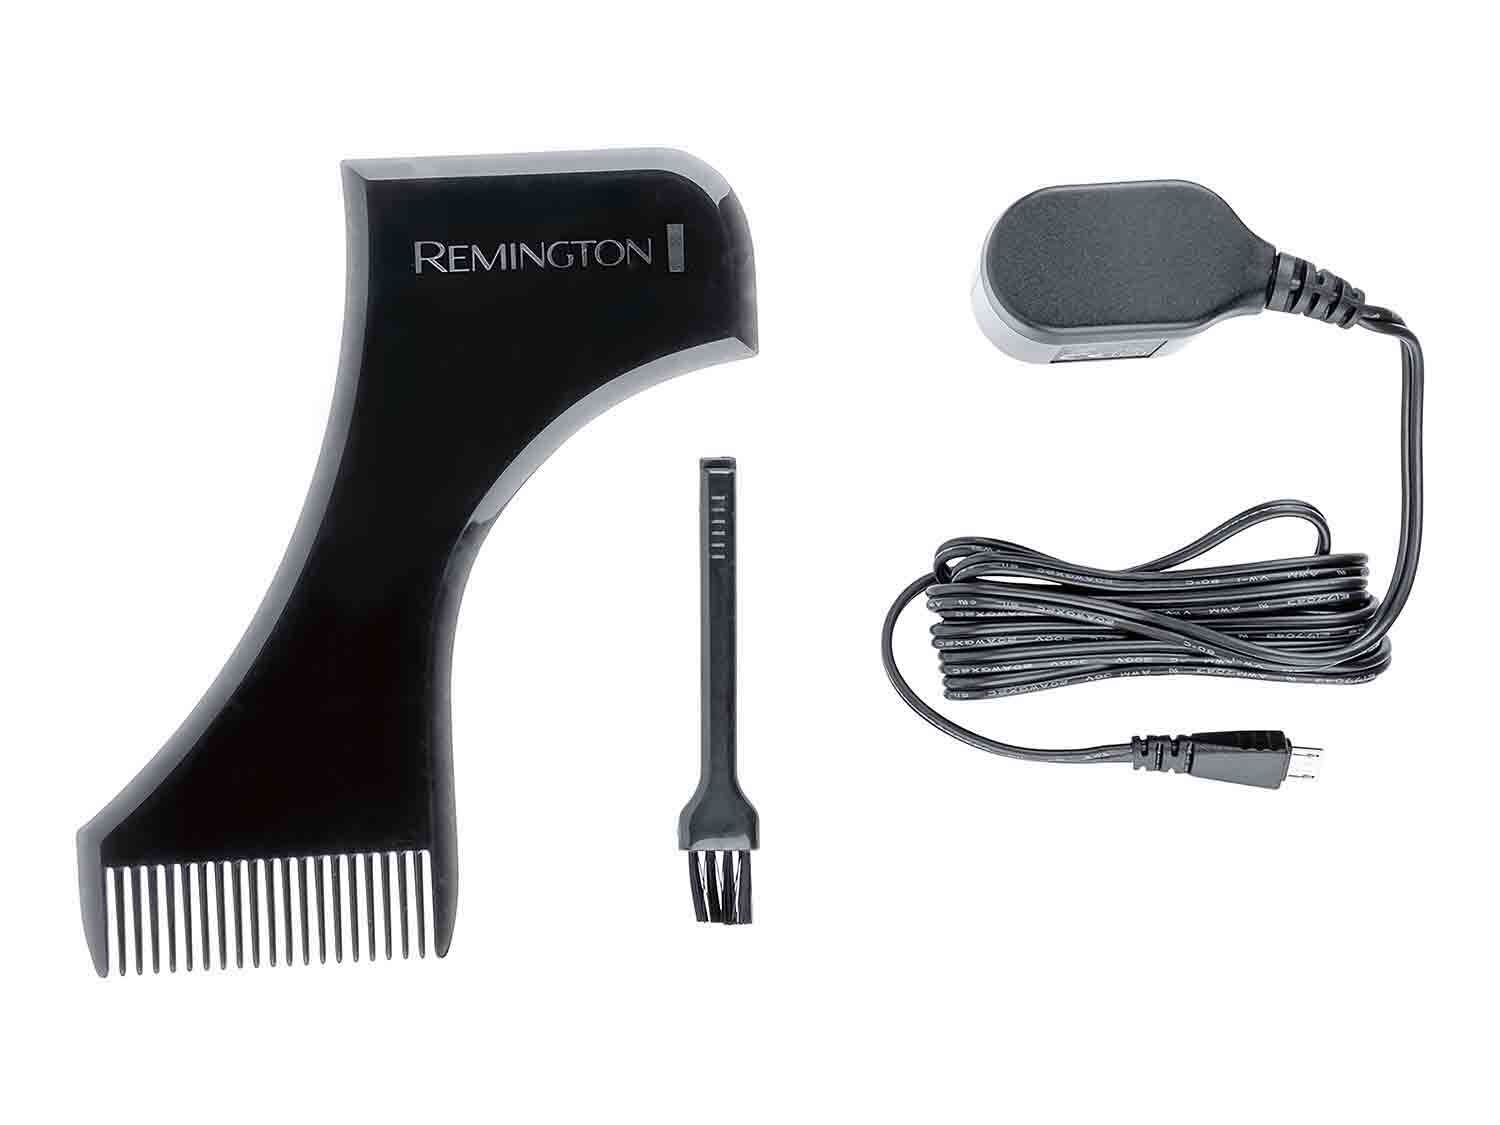 Remington recortadora de barba